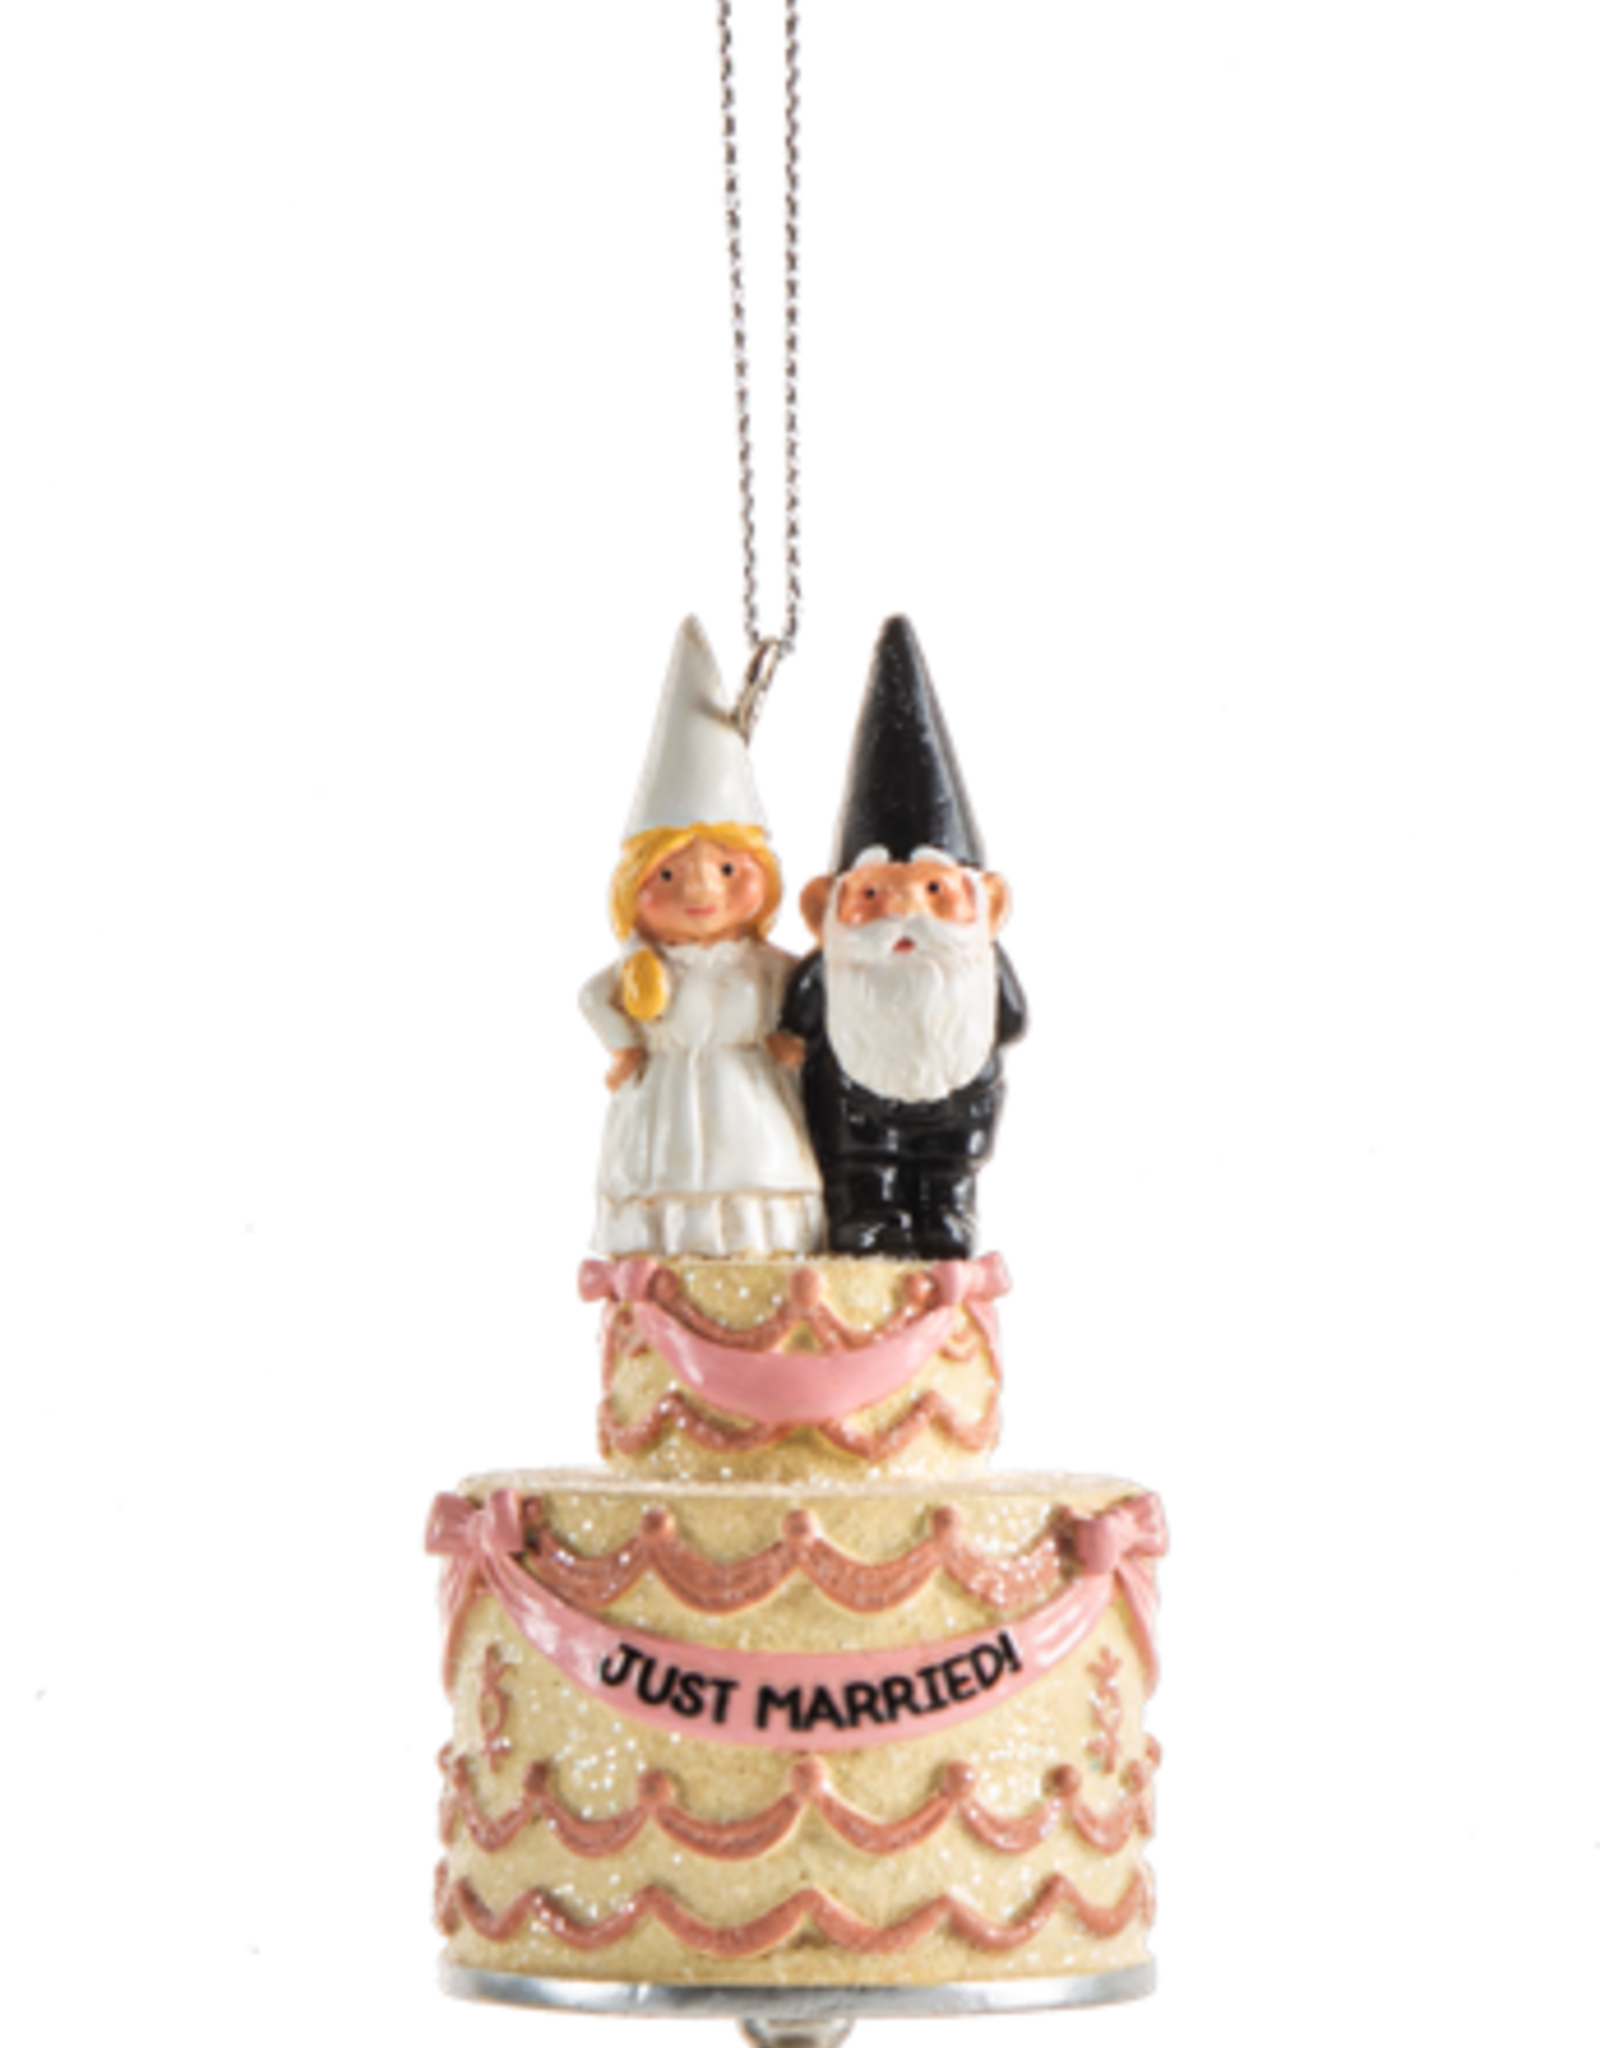 Xmas Ganz Ornament Wedding Cake w/ Gnomes MX186959